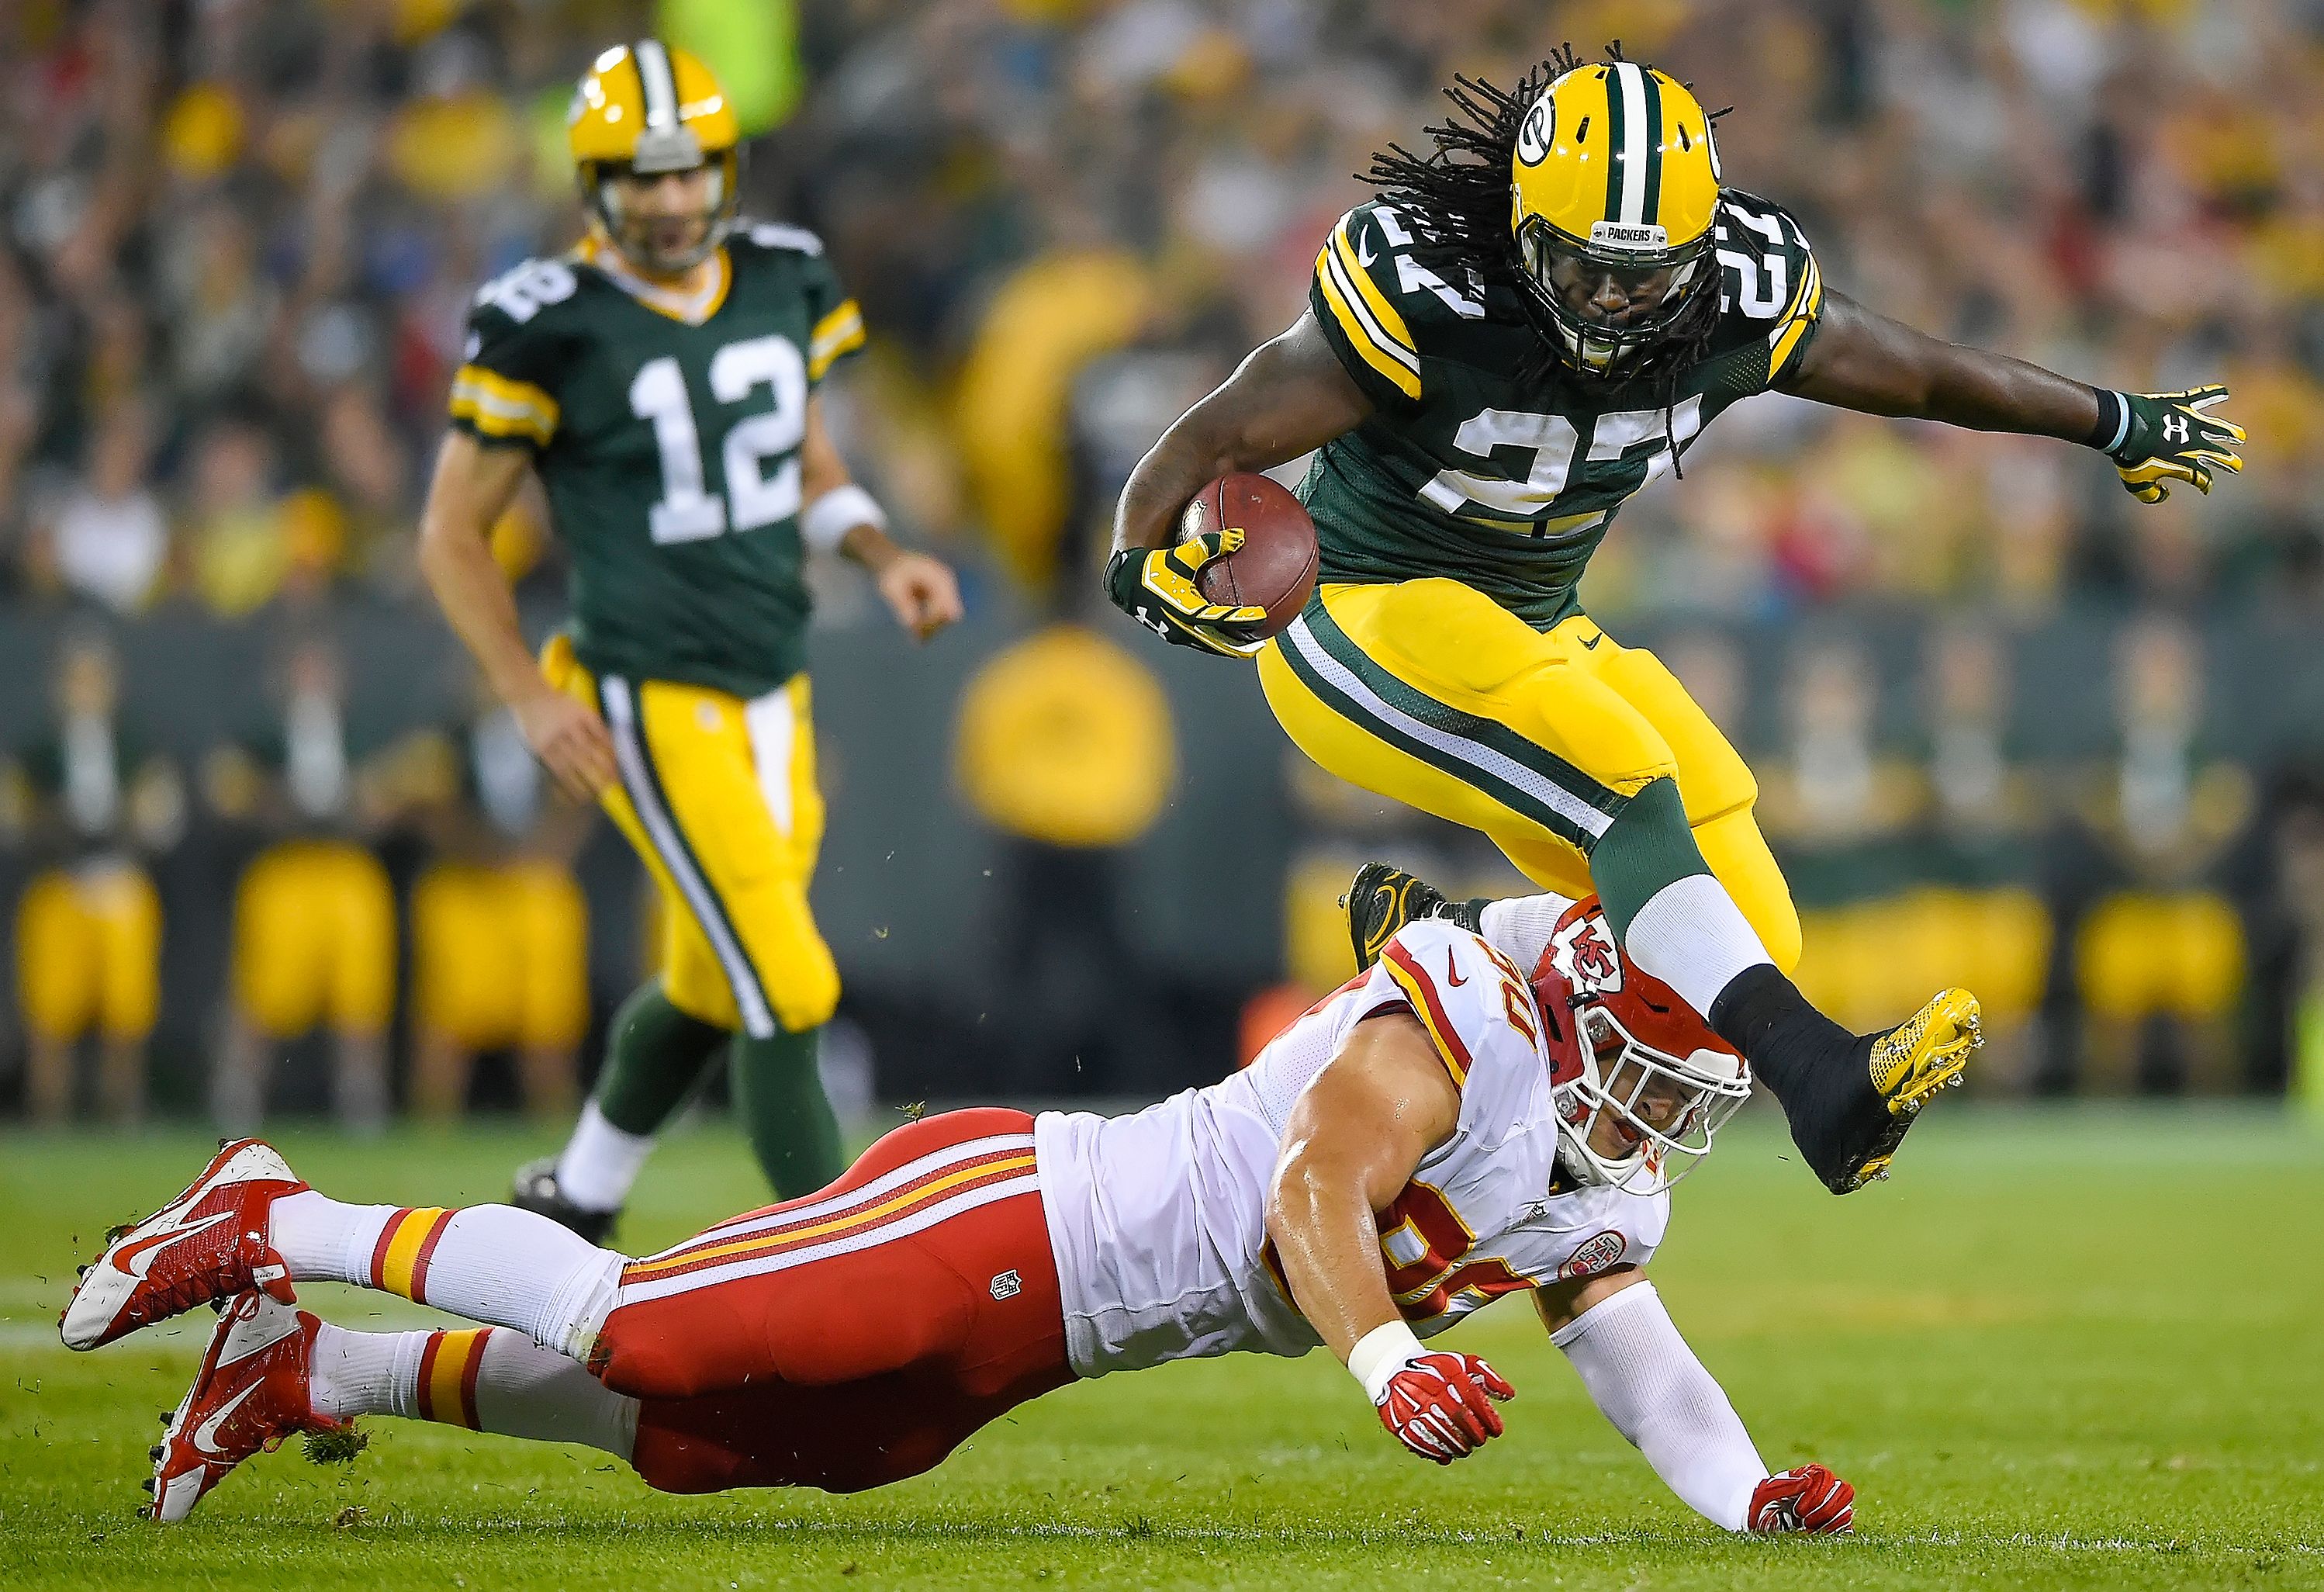 Leapfrog - Photos: Packers vs. Chiefs - ESPN